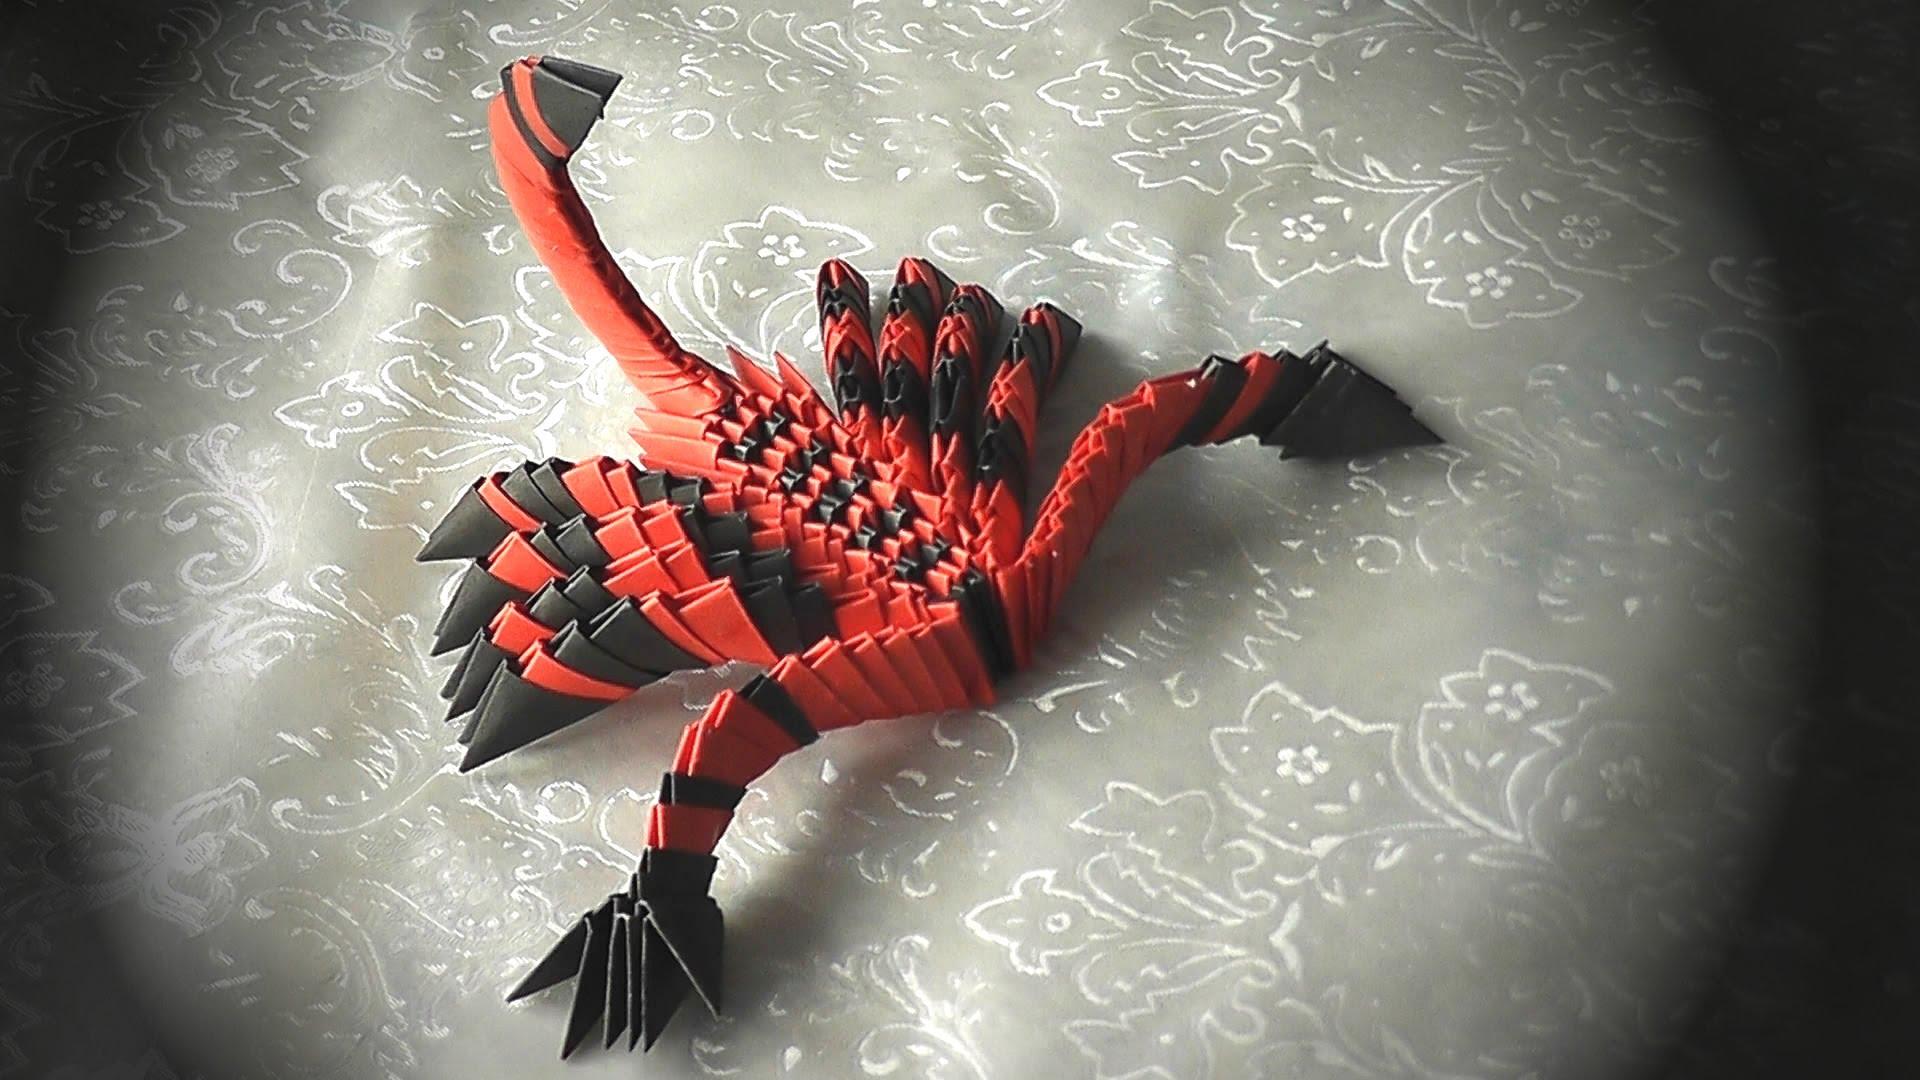 Jpg Origami Scorpion Diagrams Maxresdefault Jpg Maxresdefault Jpg 3D